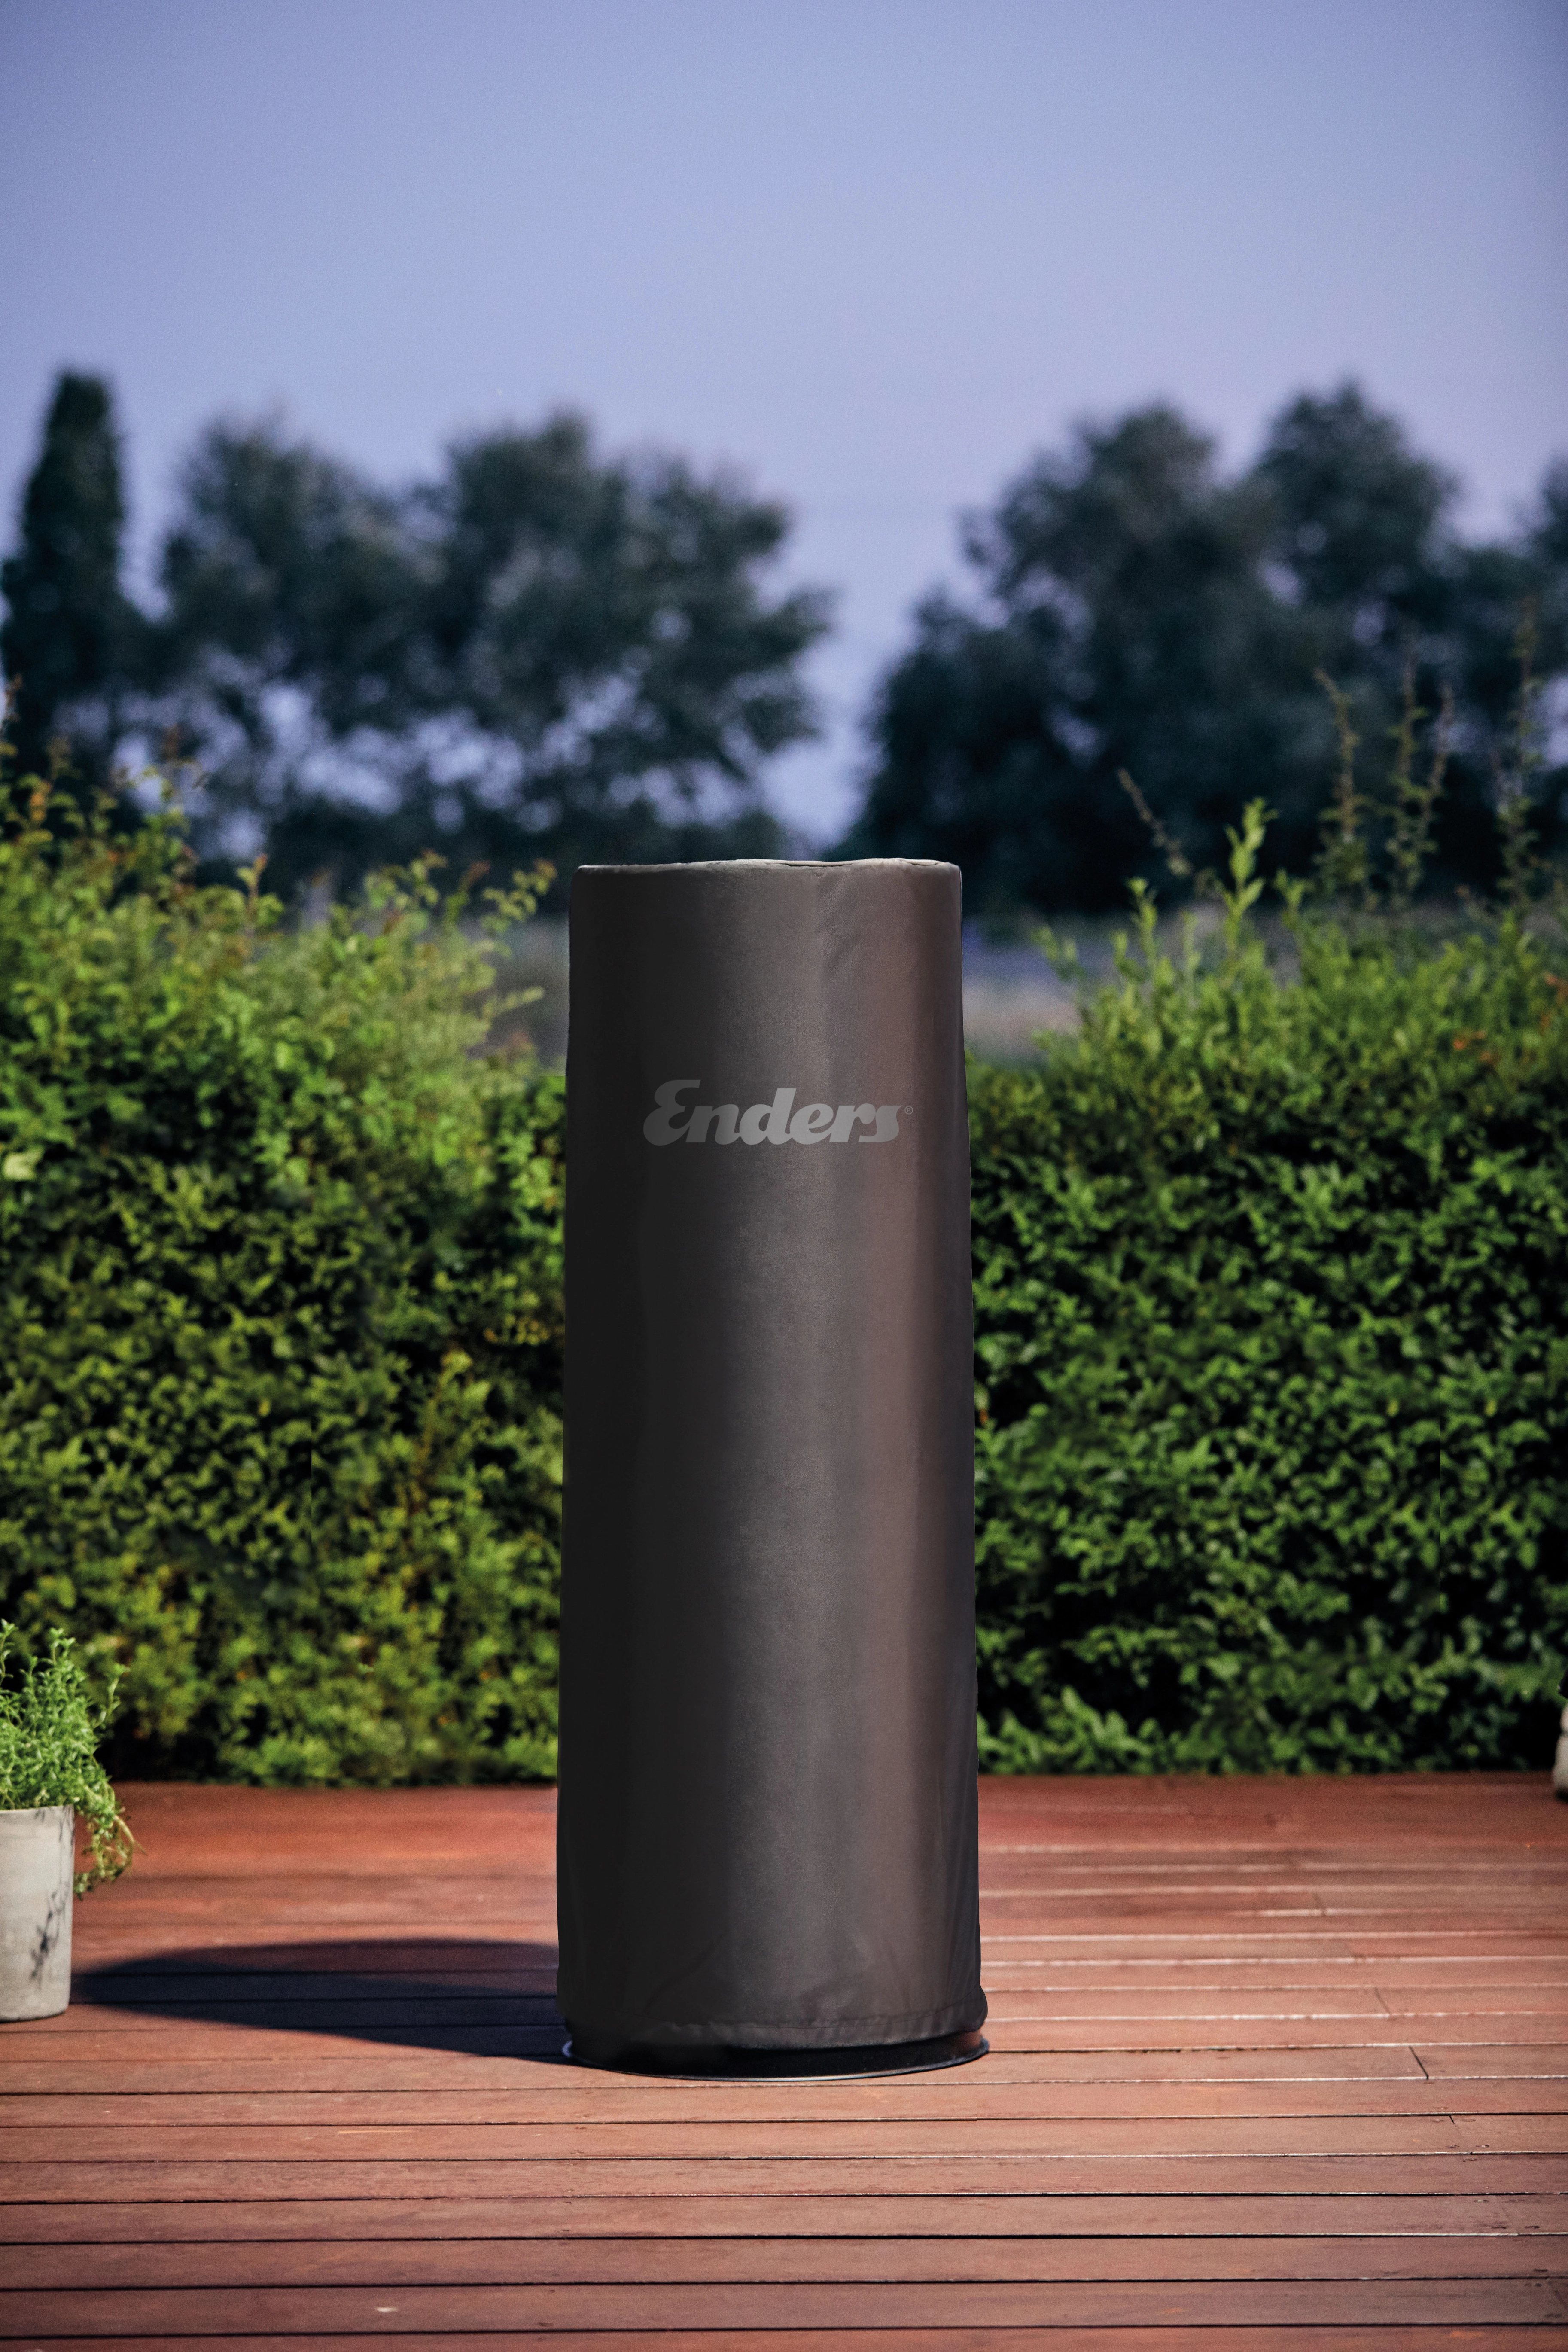 Enders® Gas-Terrassenheizer Polo 2.0 6 kW kaufen bei OBI